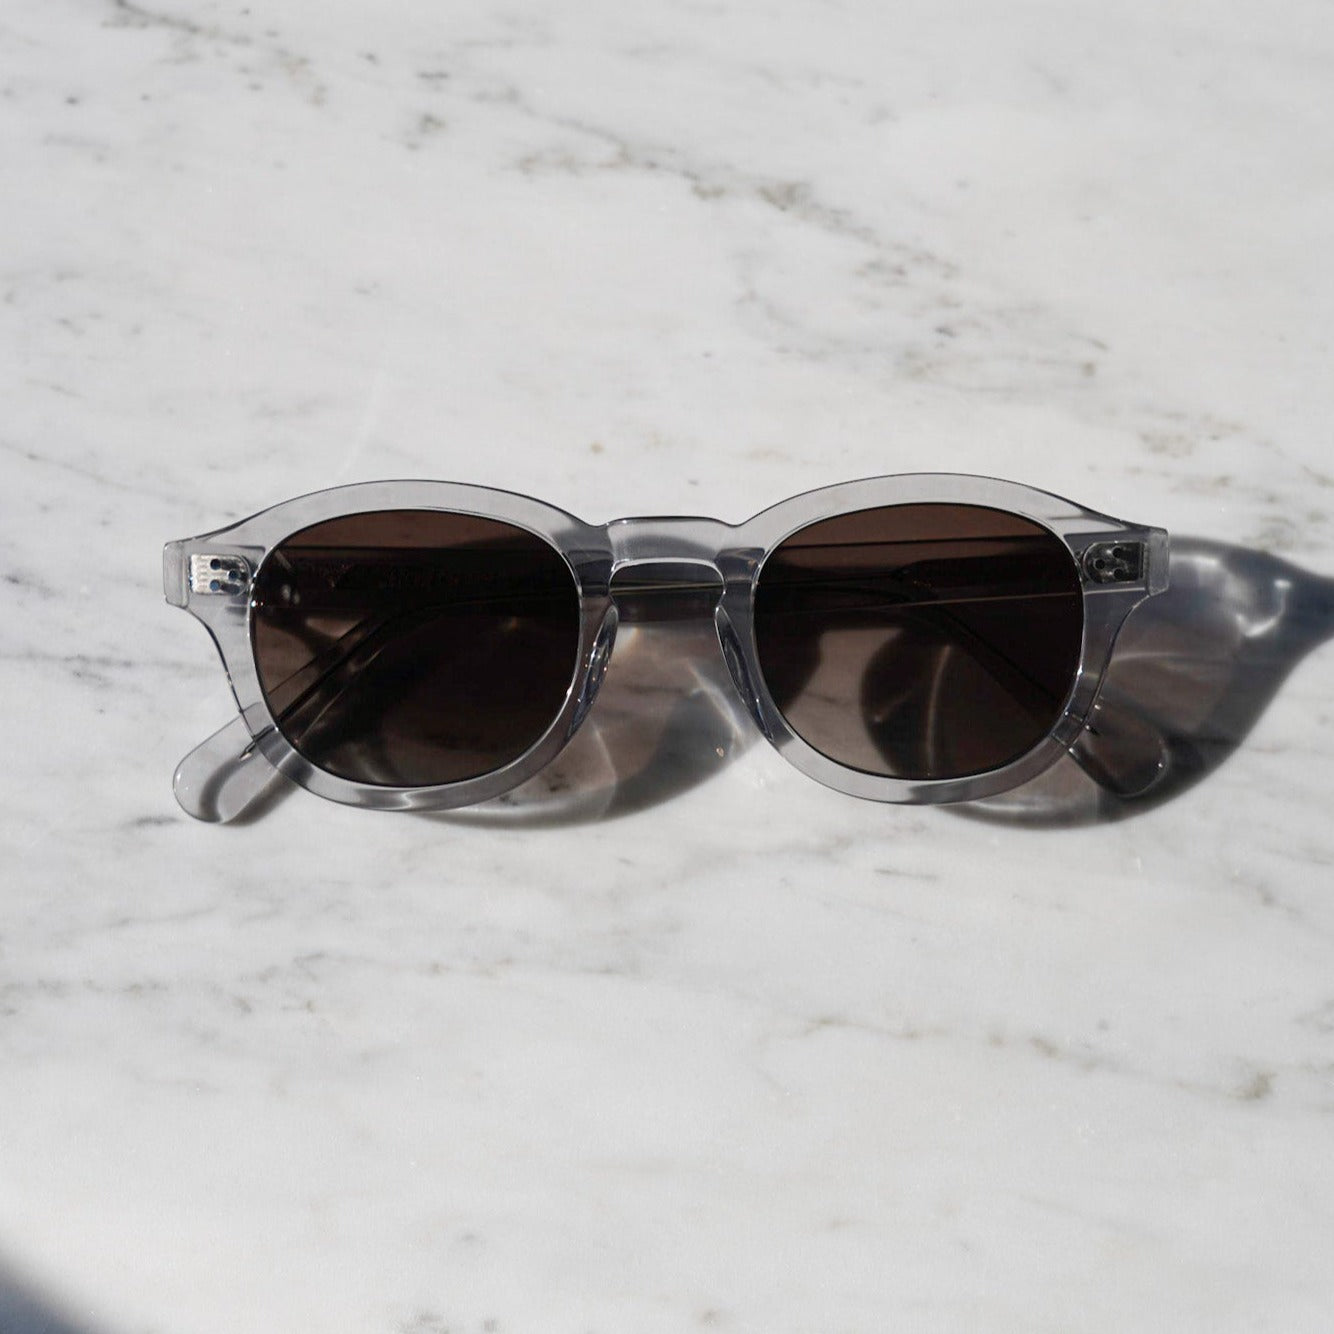 Legacy sunglasses - Transparent brown